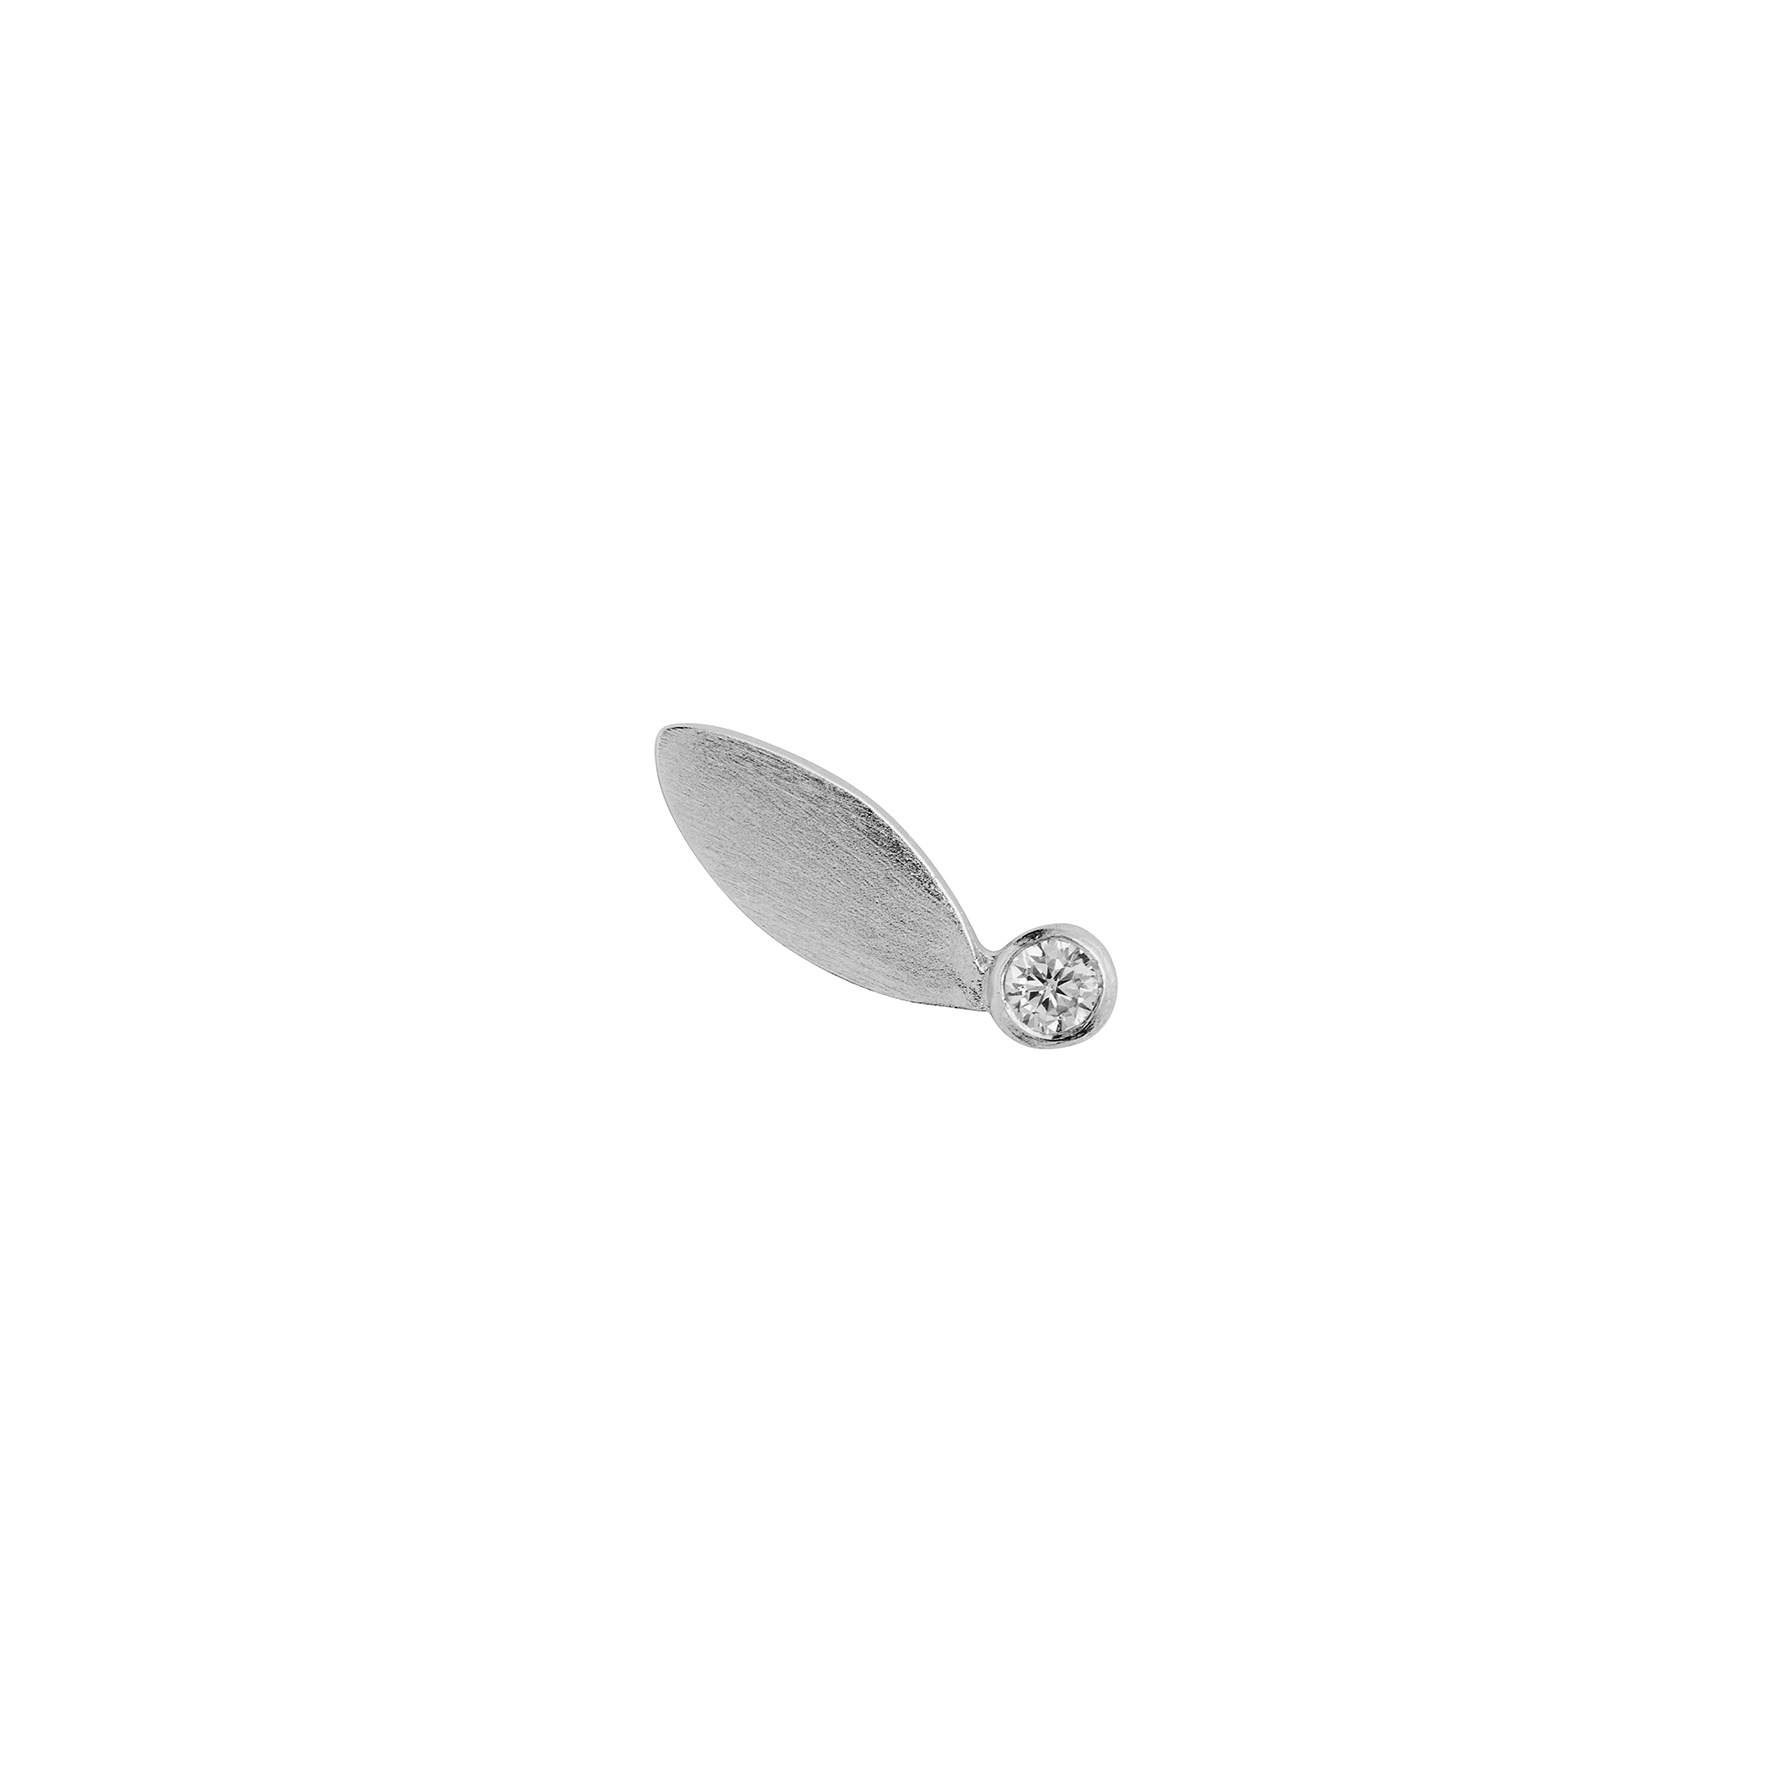 Big Dot Leaf Earstick Light Peridot from STINE A Jewelry in Silver Sterling 925|Matt